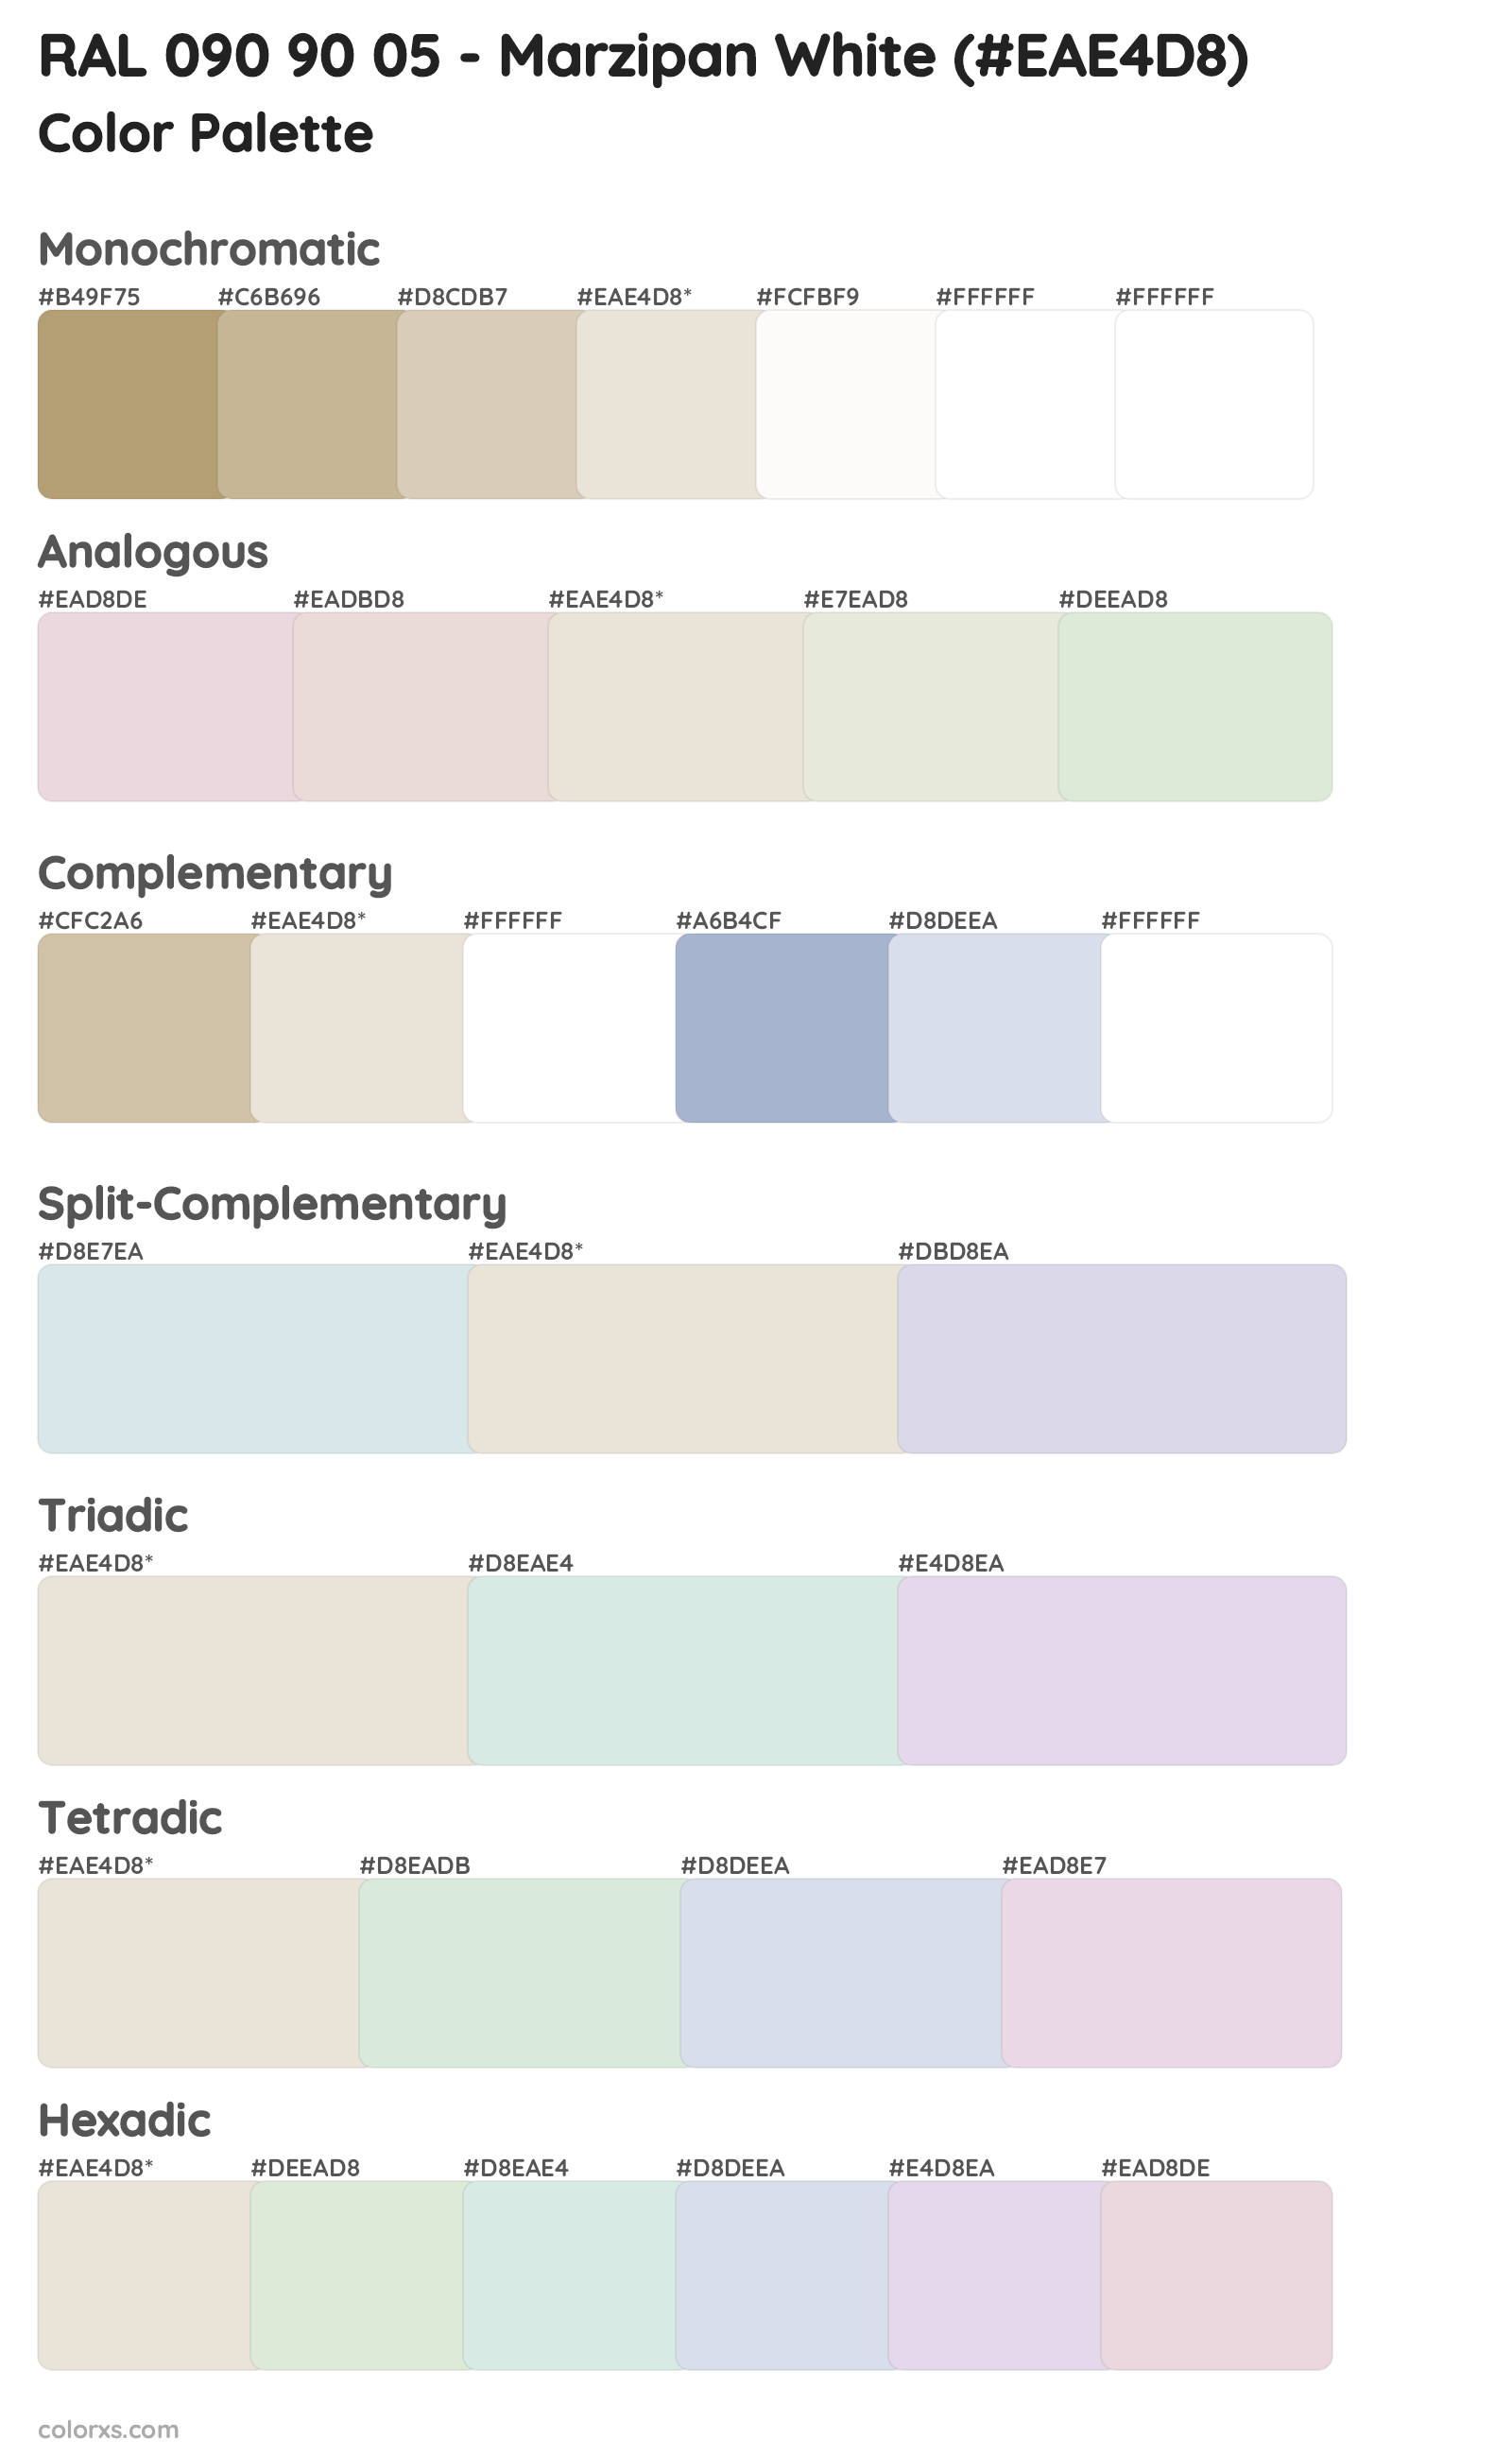 RAL 090 90 05 - Marzipan White Color Scheme Palettes